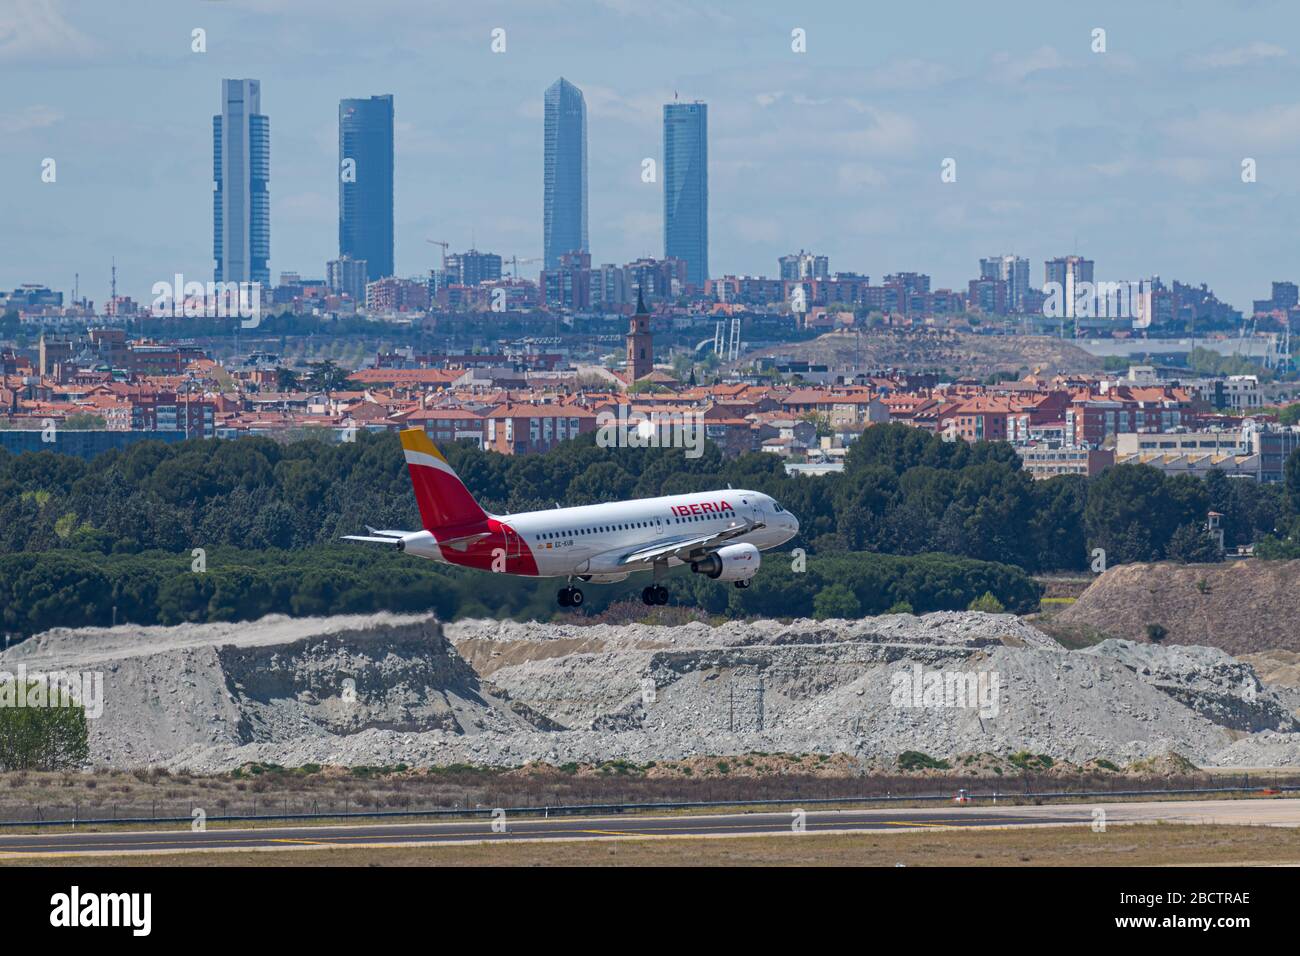 MADRID, SPANIEN - 14. APRIL 2019: Iberia Airlines Airbus A319 Passagierflugzeug Landung auf dem Madrid-Barajas International Airport Adolfo Suarez im Backg Stockfoto